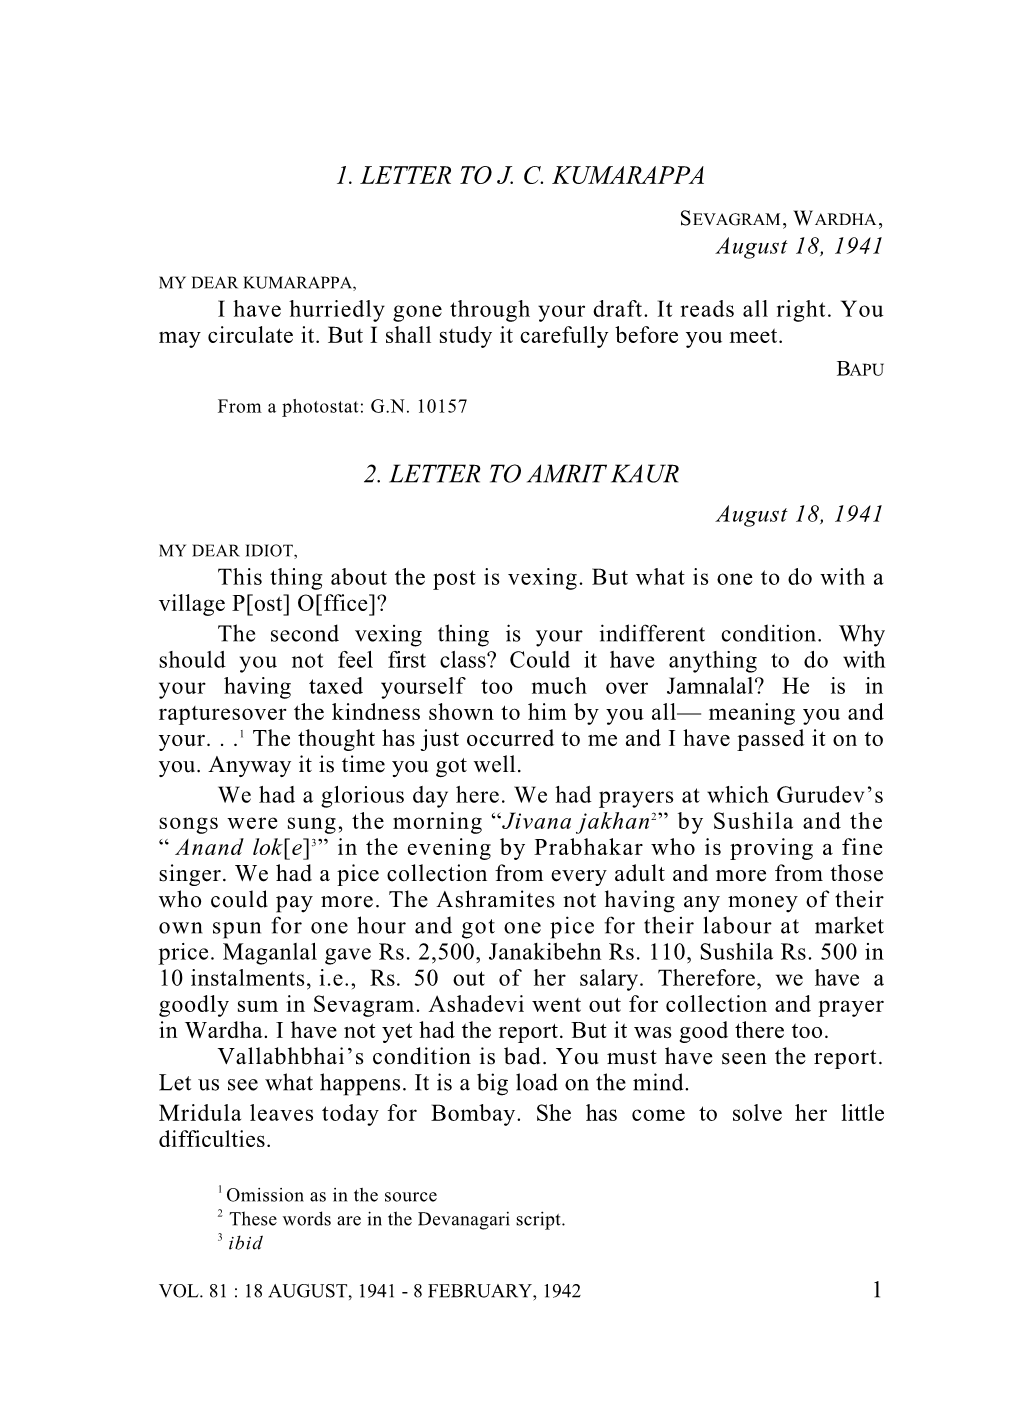 1. Letter to J. C. Kumarappa 2. Letter to Amrit Kaur